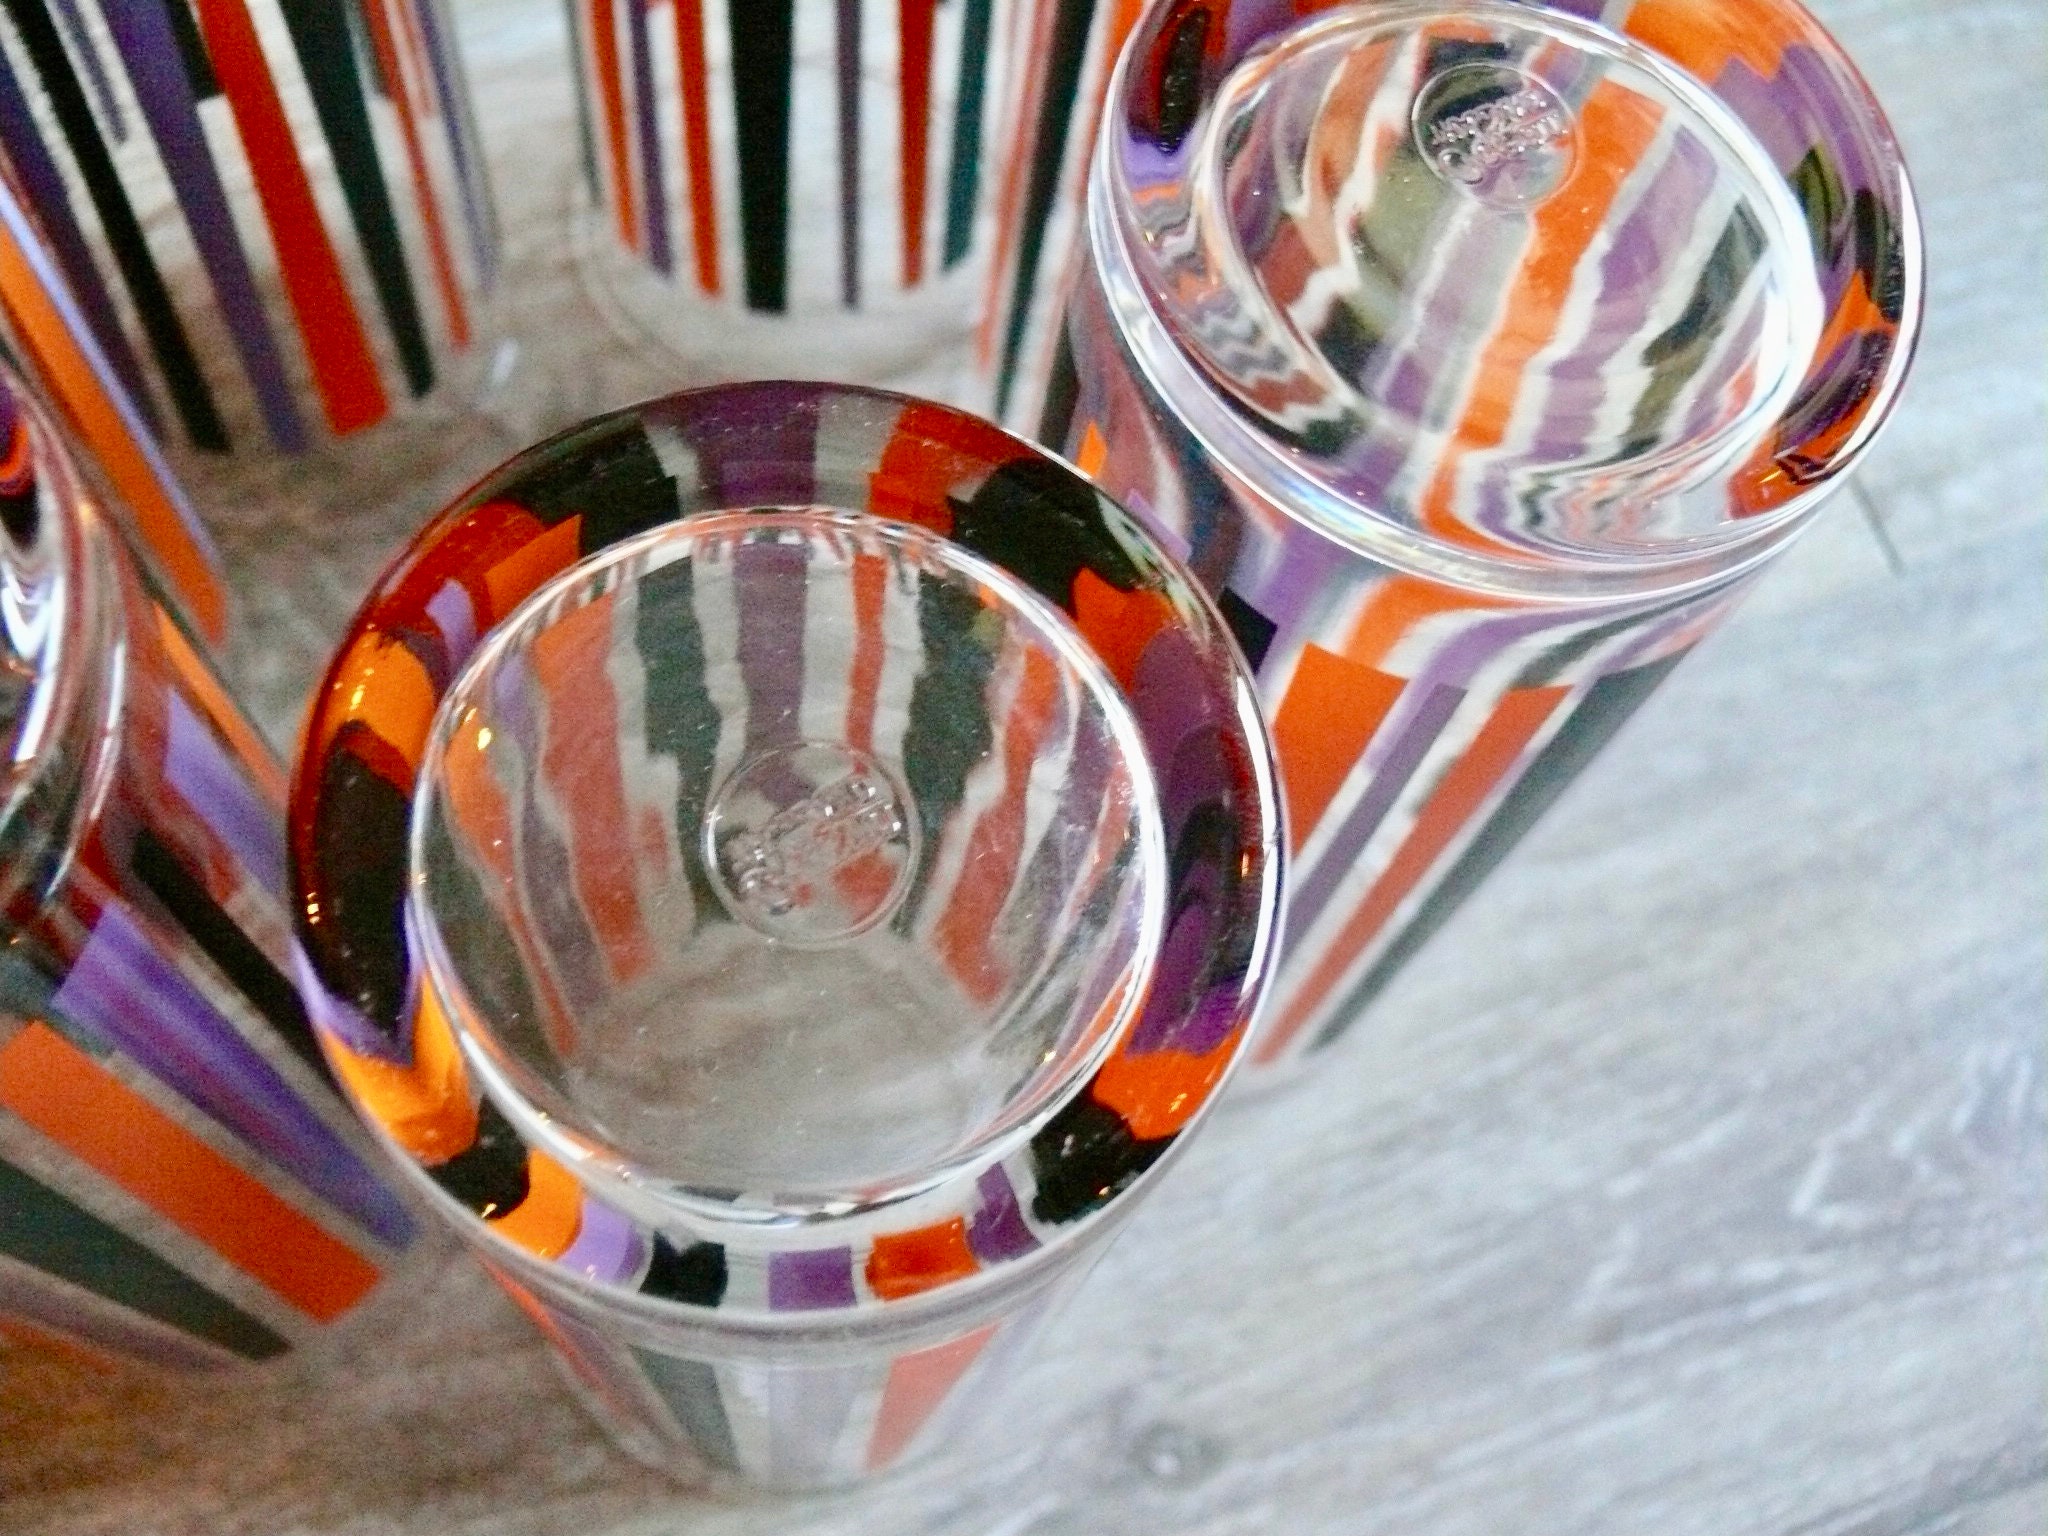 Striped Tom Collins Glass, Set of 4 – Half Past Seven